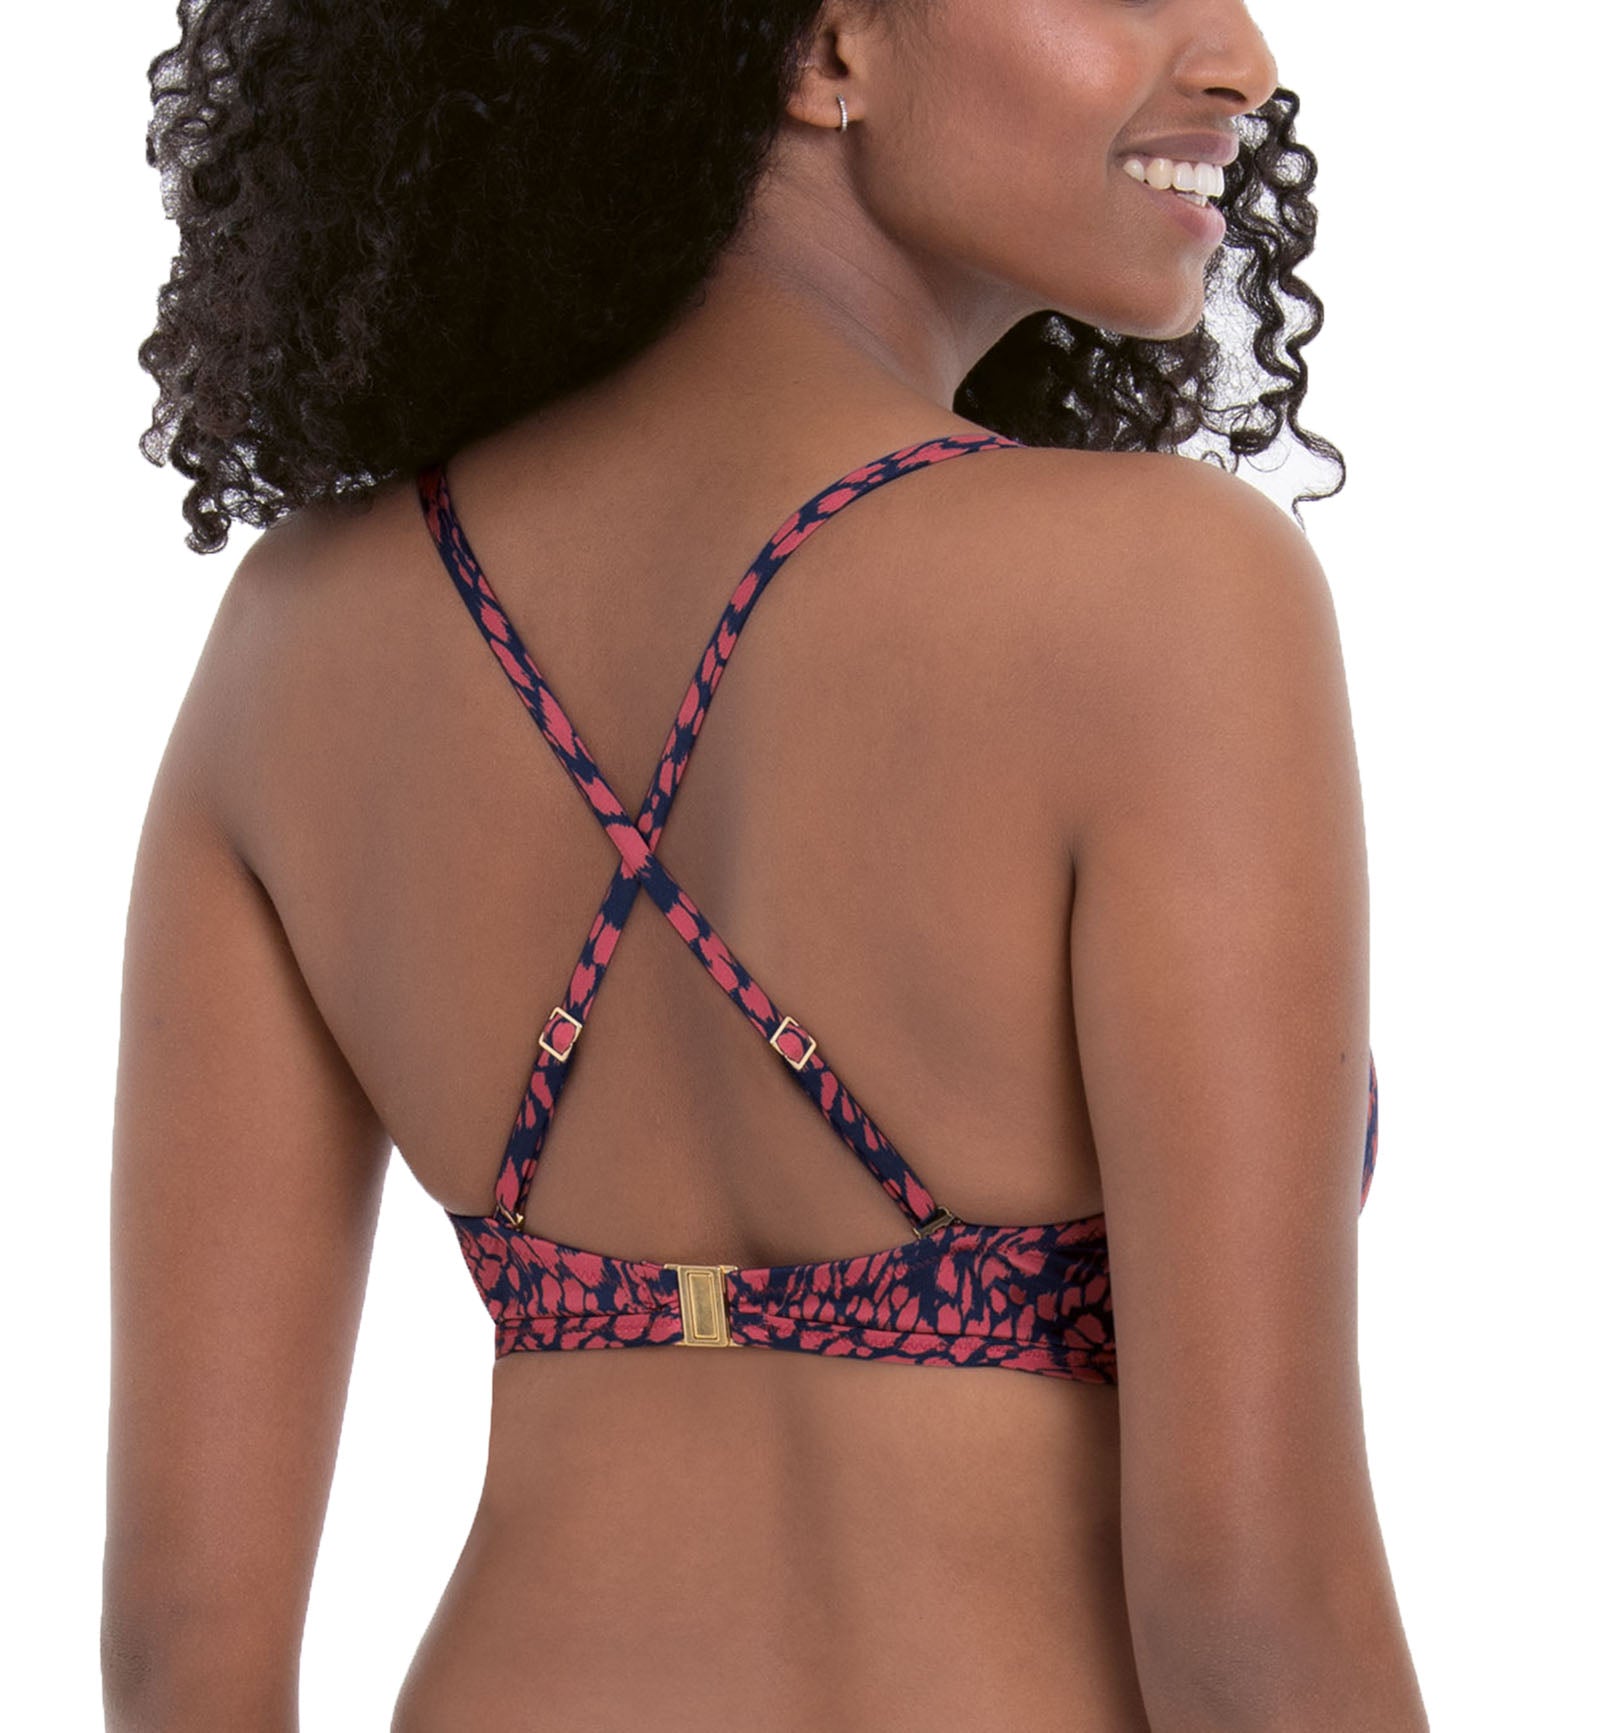 Anita Marble Beach Marielle Underwire Multiway Bikini Top (8799-1),30D,Rosewood - Rosewood,30D